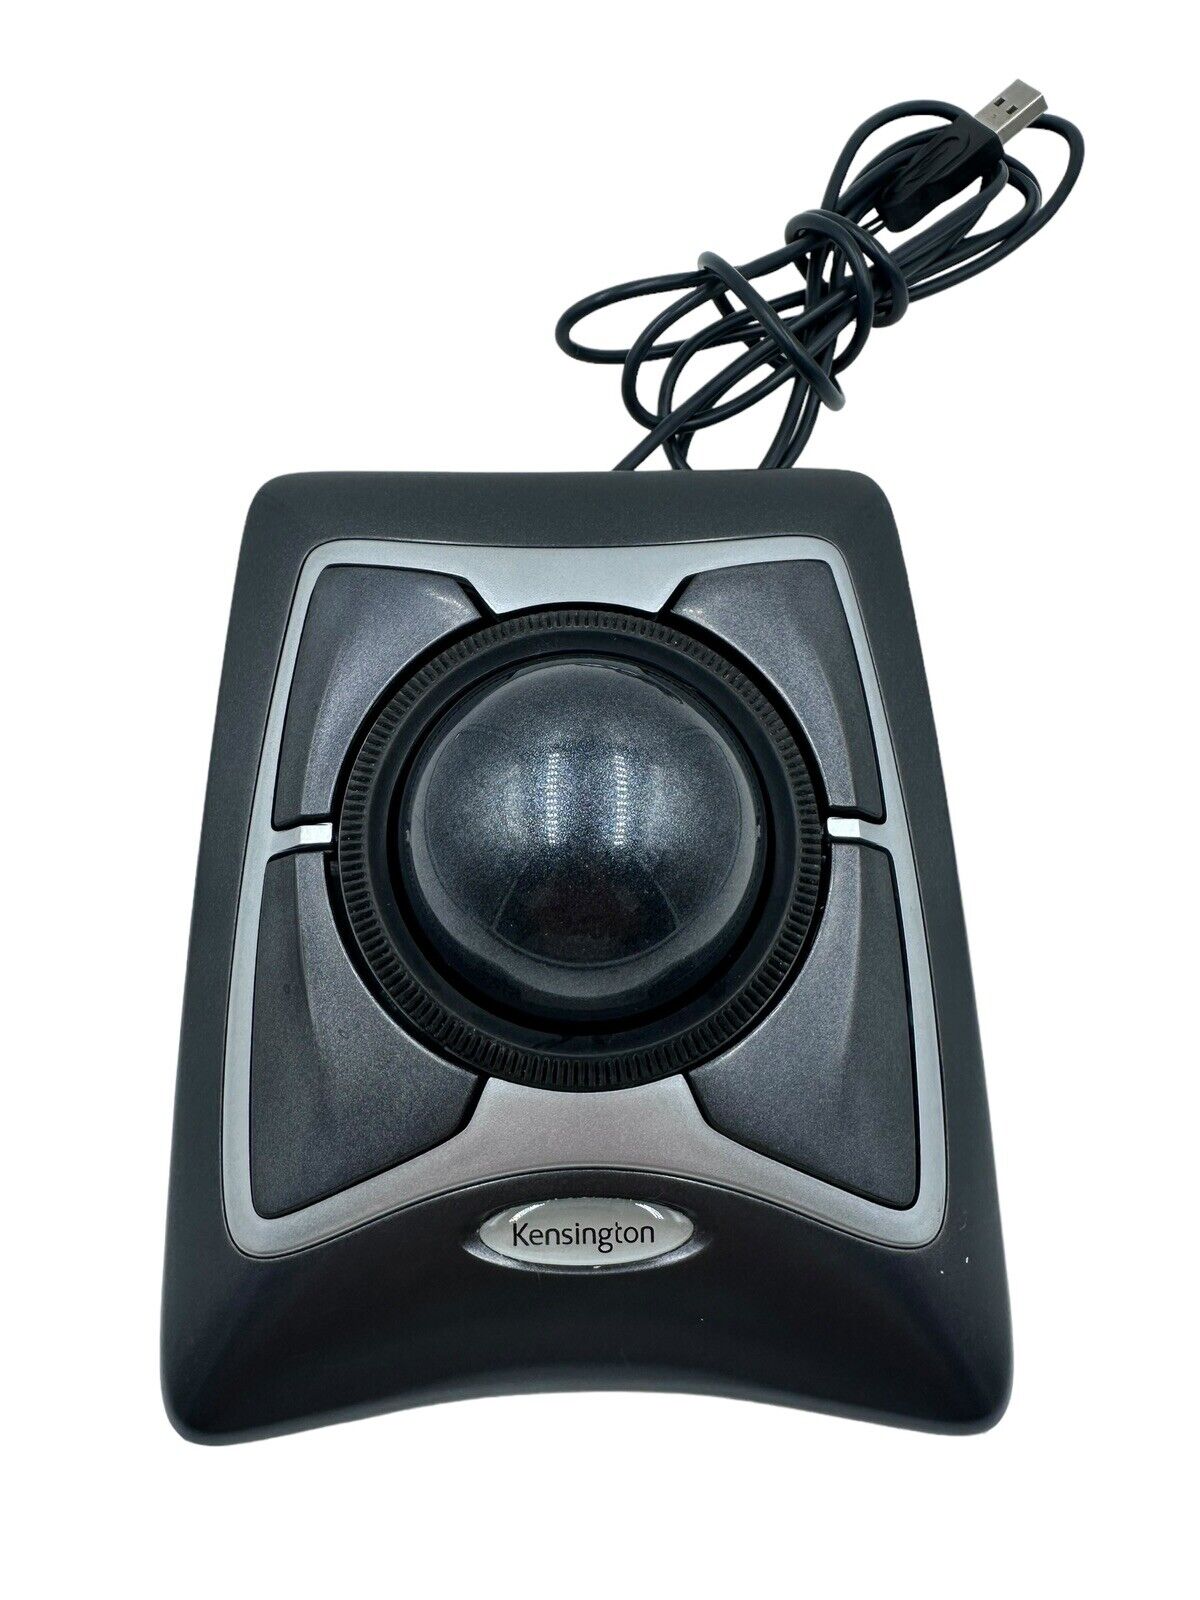 Kensington Expert Trackball Mouse K64325 Wired USB 4 Button